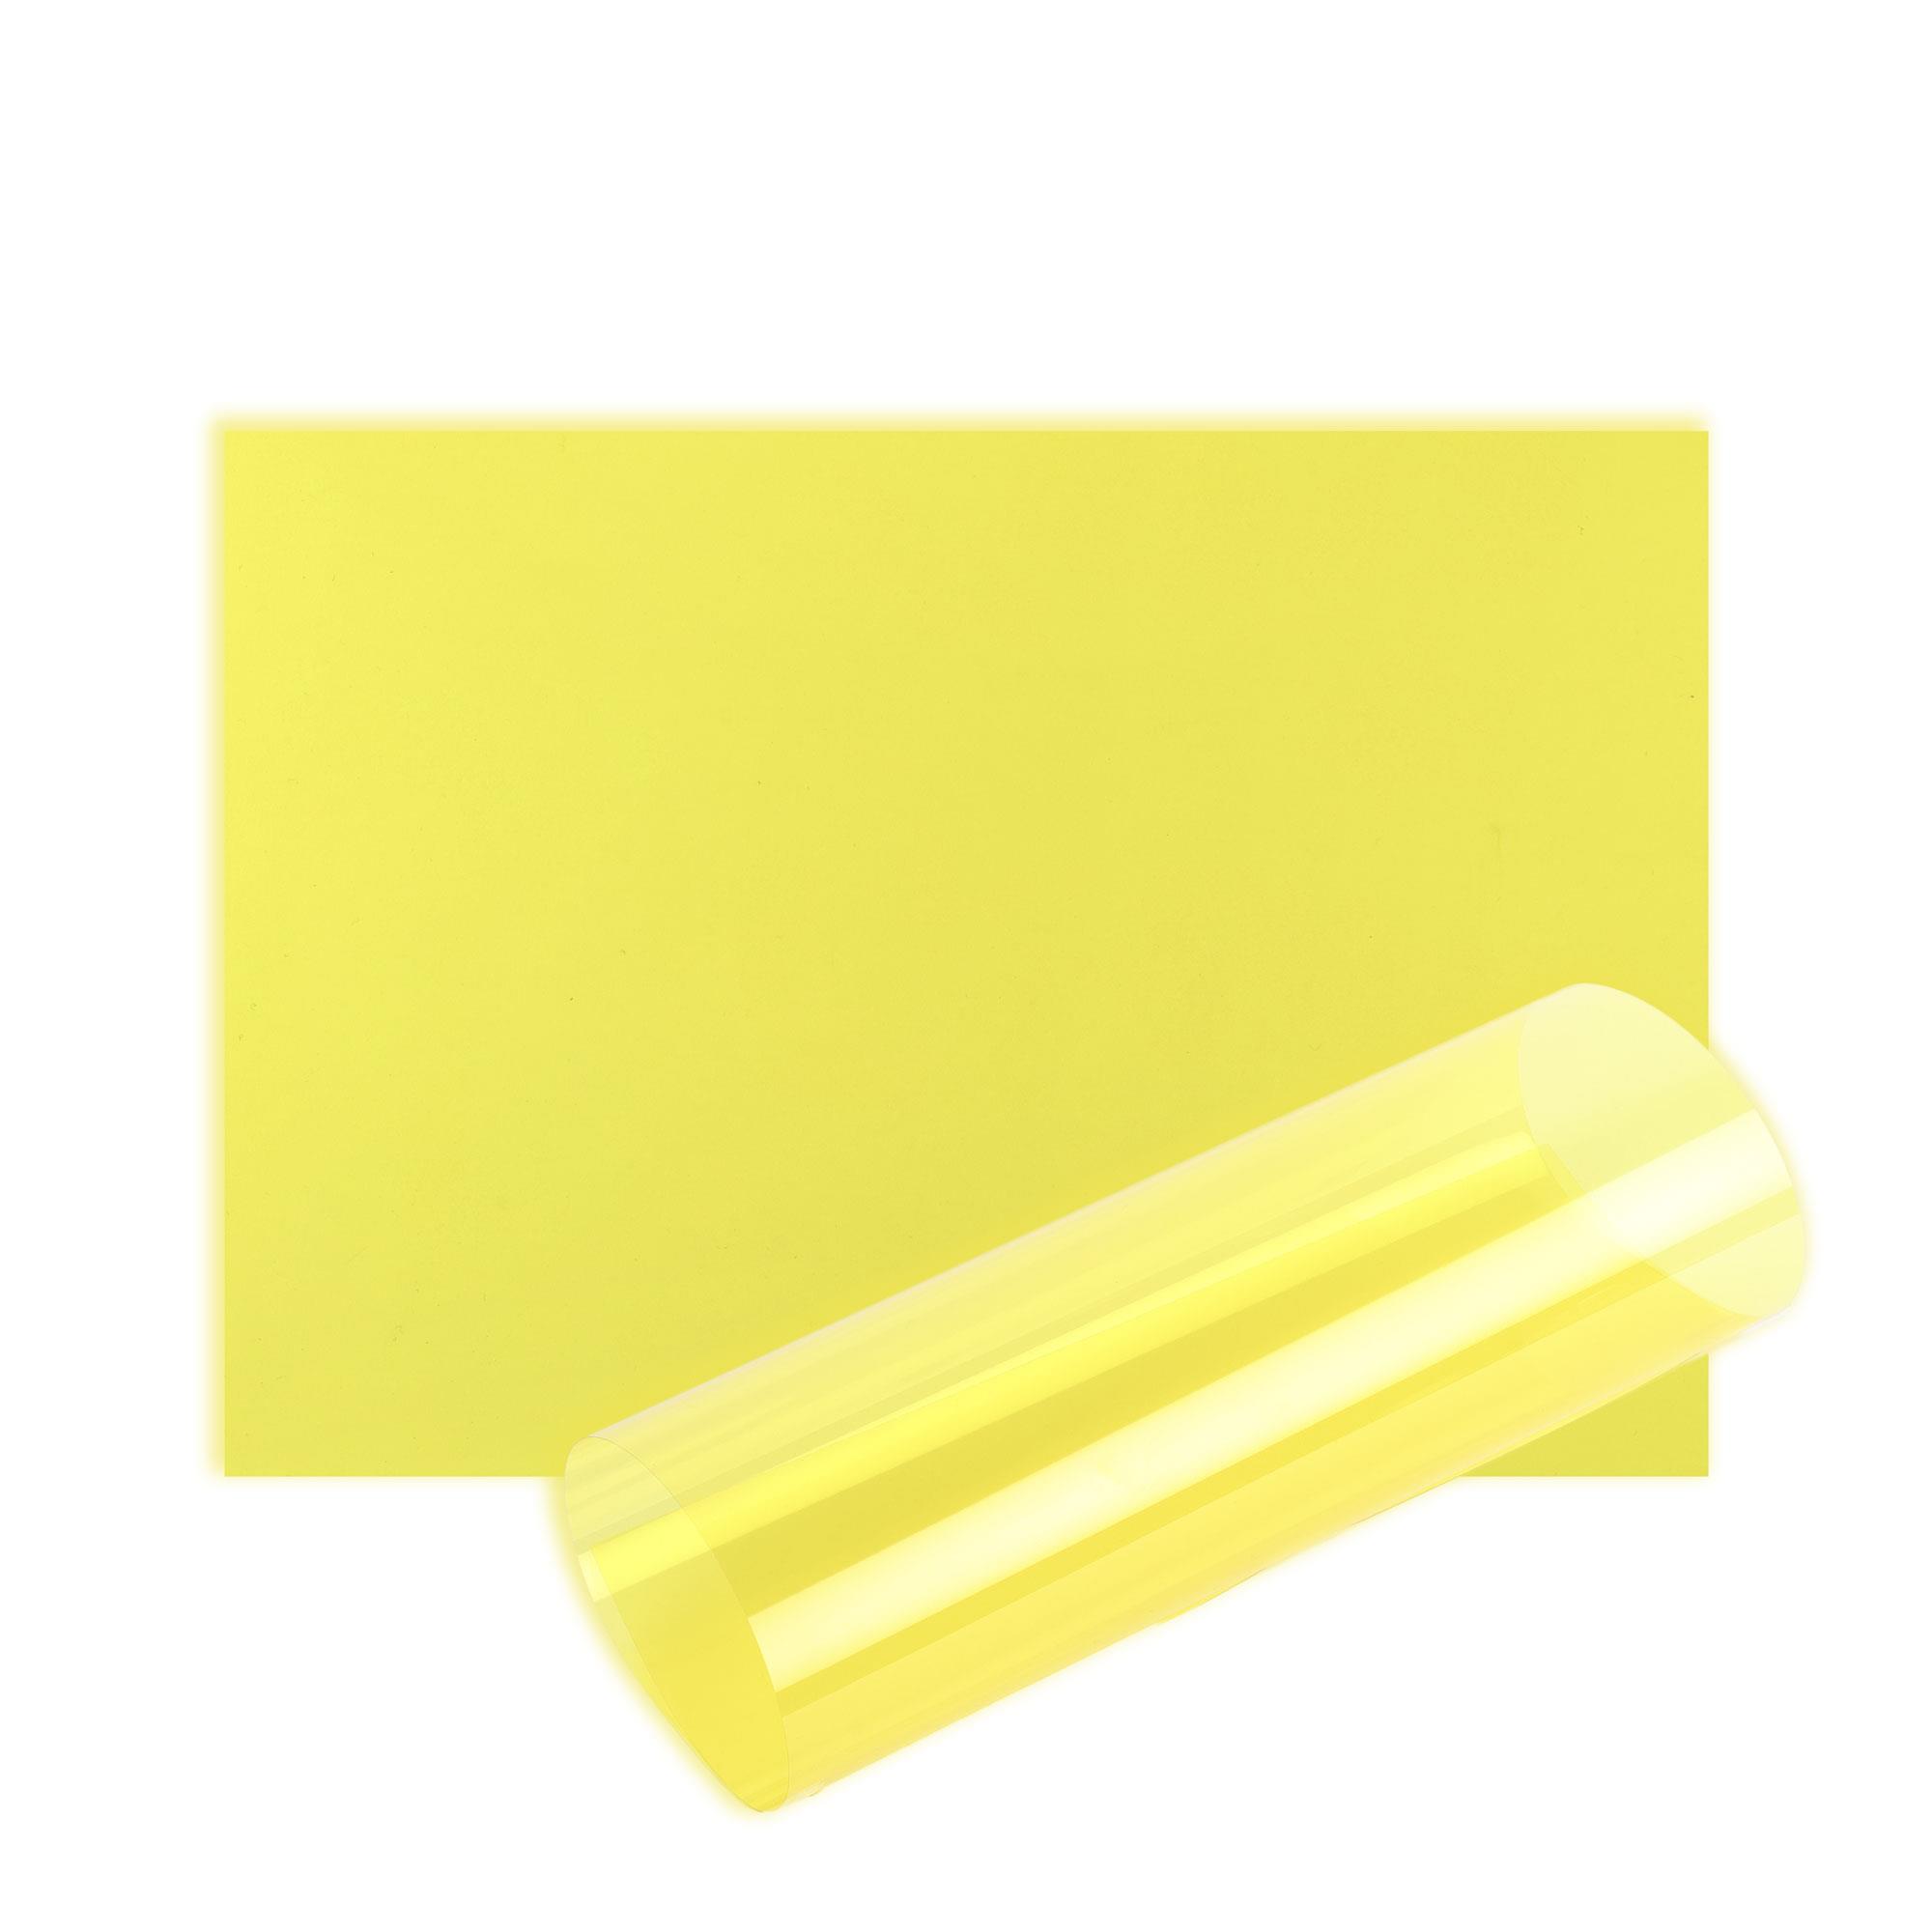 acetate-sheets-a5-ohp-sheet-colour-acetate-clear-film-plastic-light